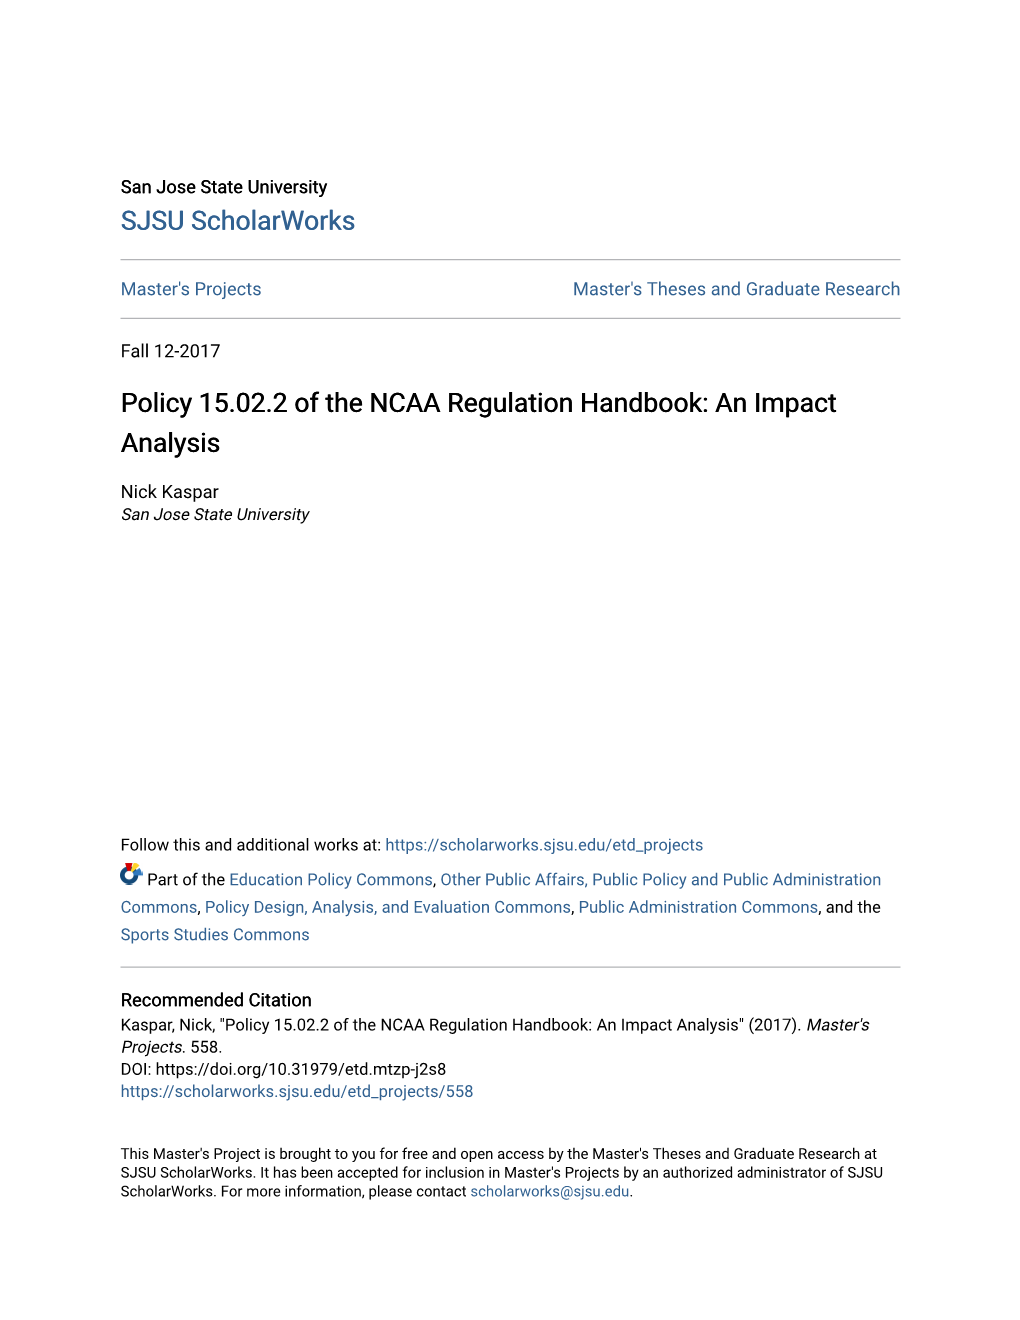 Policy 15.02.2 of the NCAA Regulation Handbook: an Impact Analysis